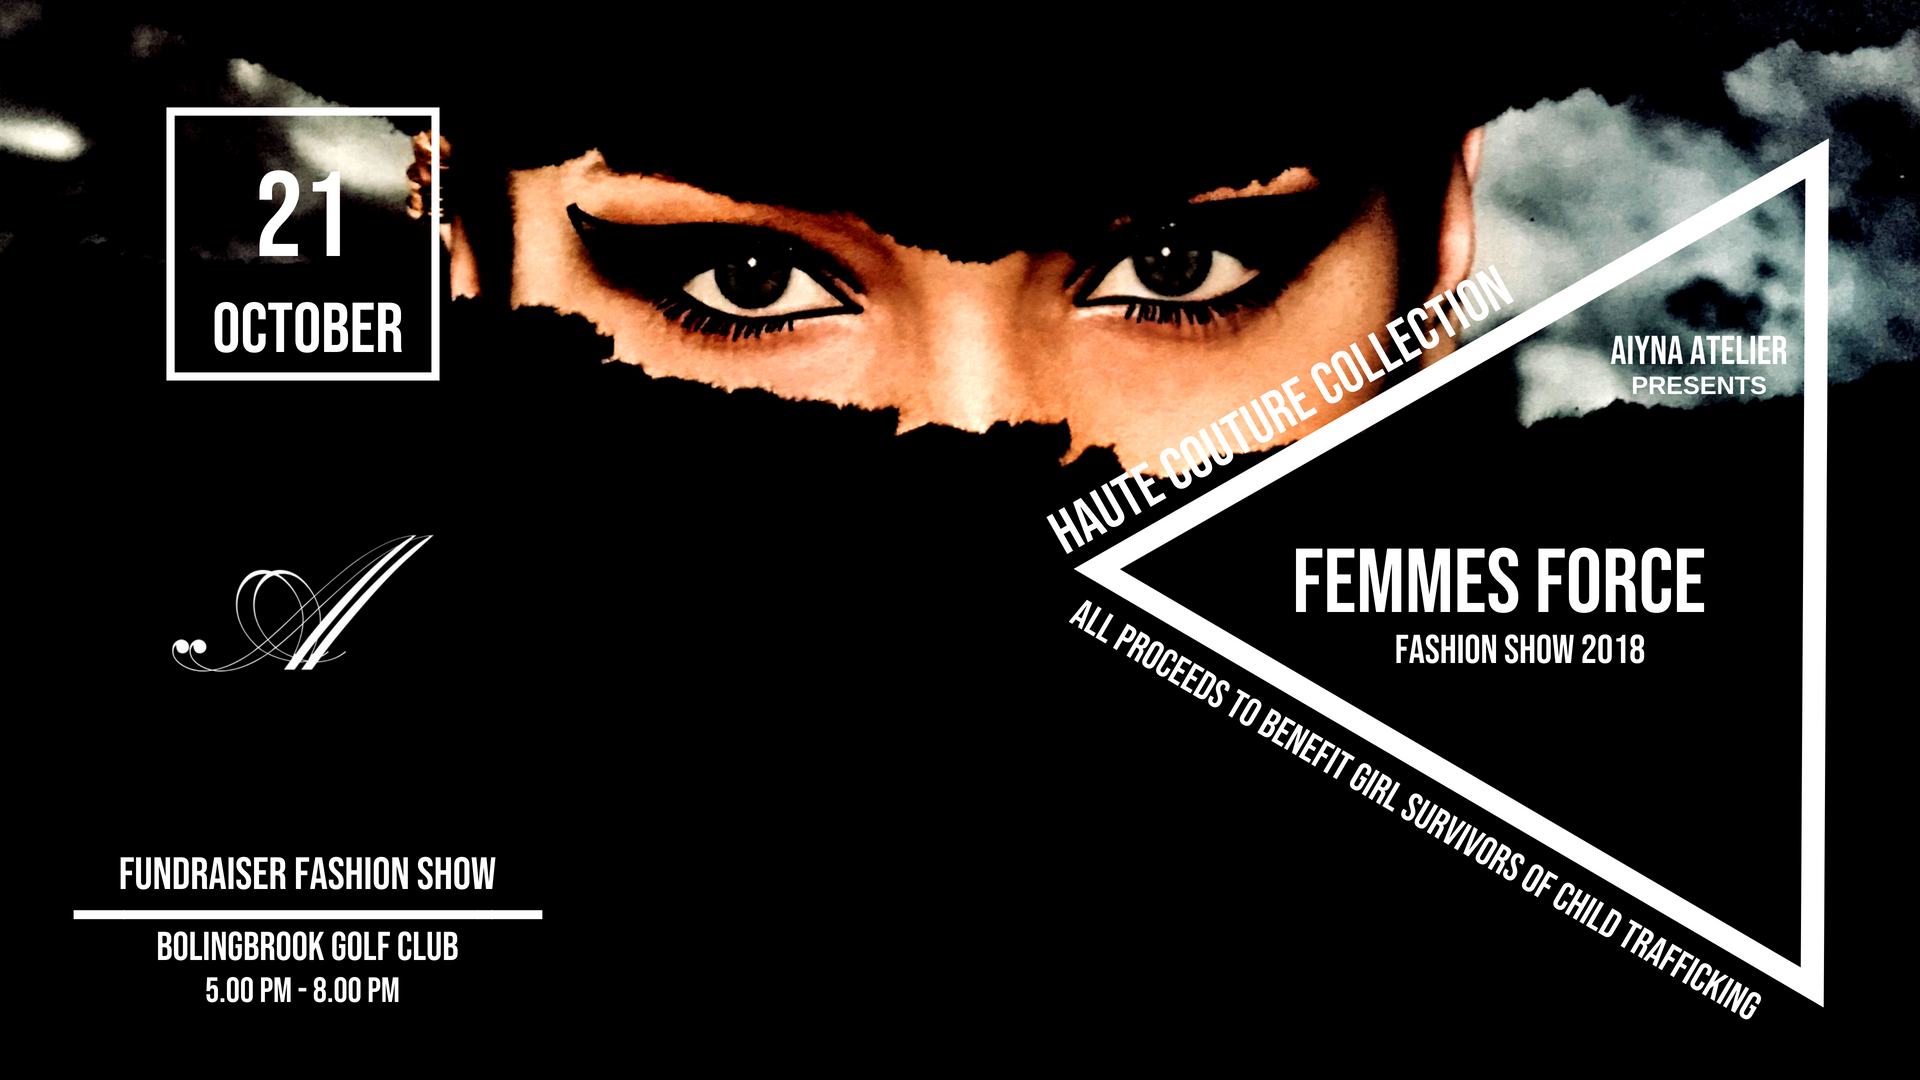 Aiyna Atelier Presents: Femmes Force Fashion Show